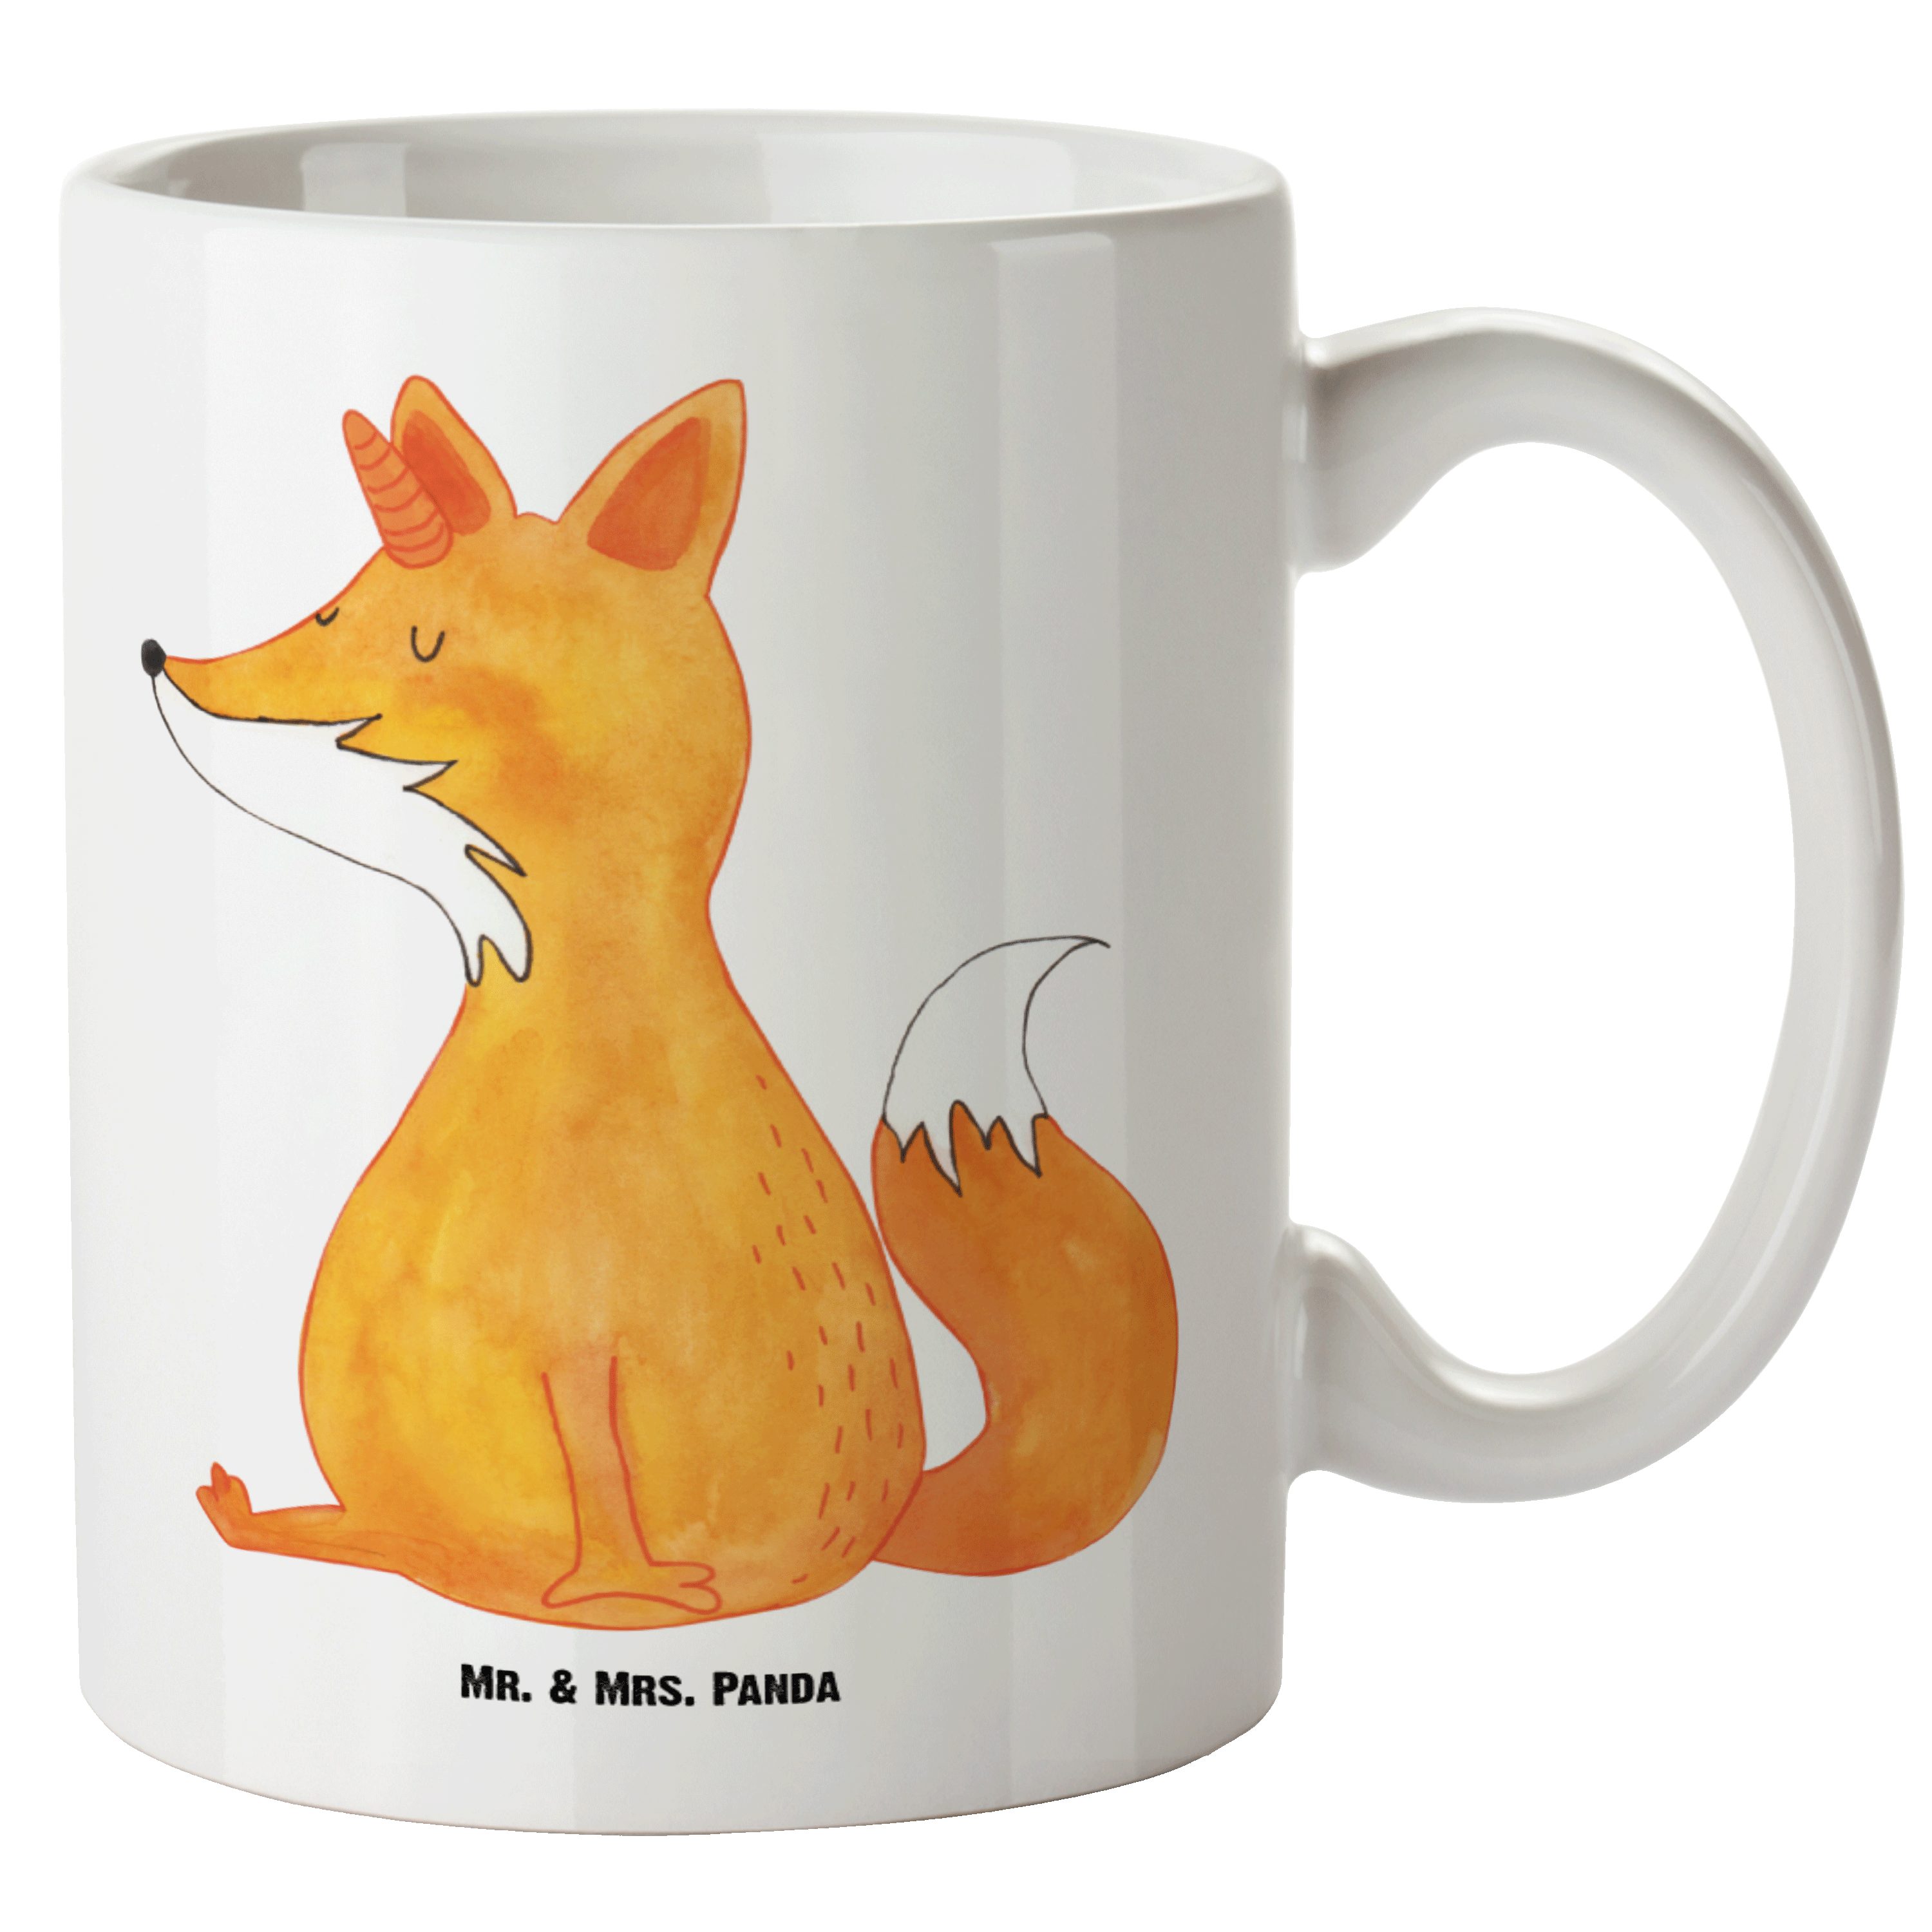 Mr. & Mrs. Panda Tasse Fuchshörnchen Wunsch - Weiß - Geschenk, Einhorn, Grosse Kaffeetasse, XL Tasse Keramik